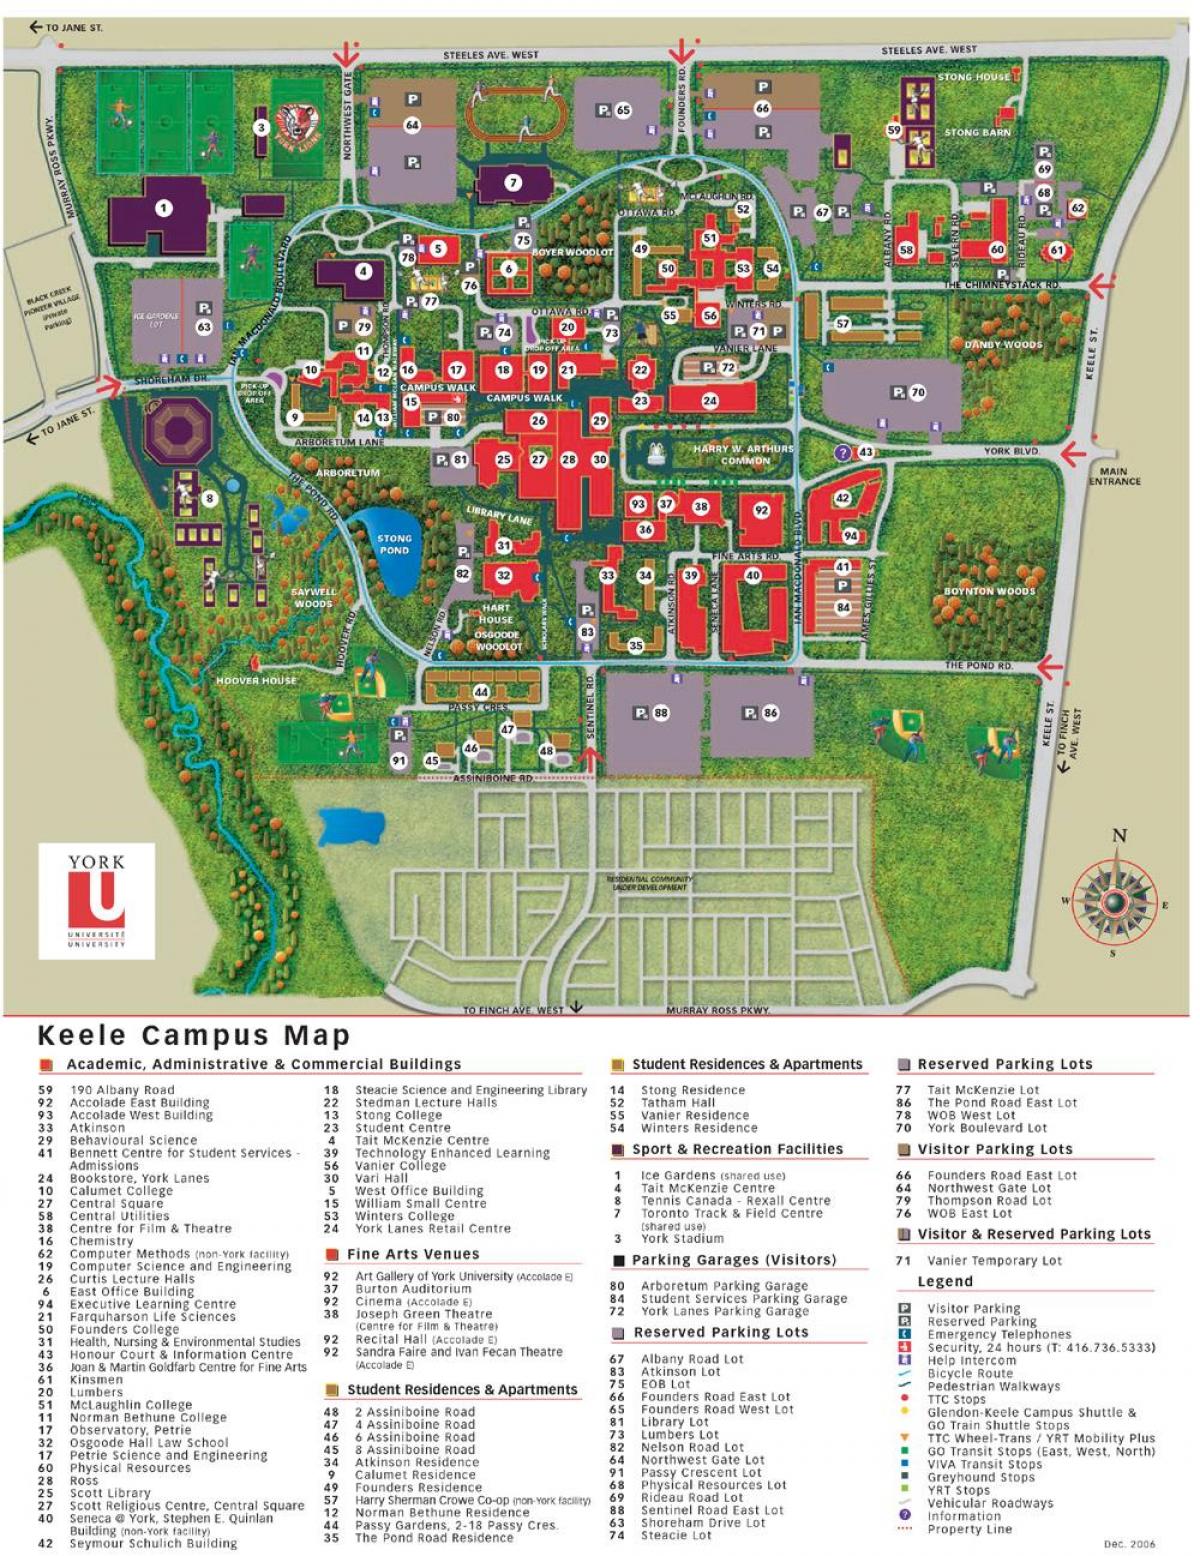 Žemėlapis Jorko universiteto keele universiteto